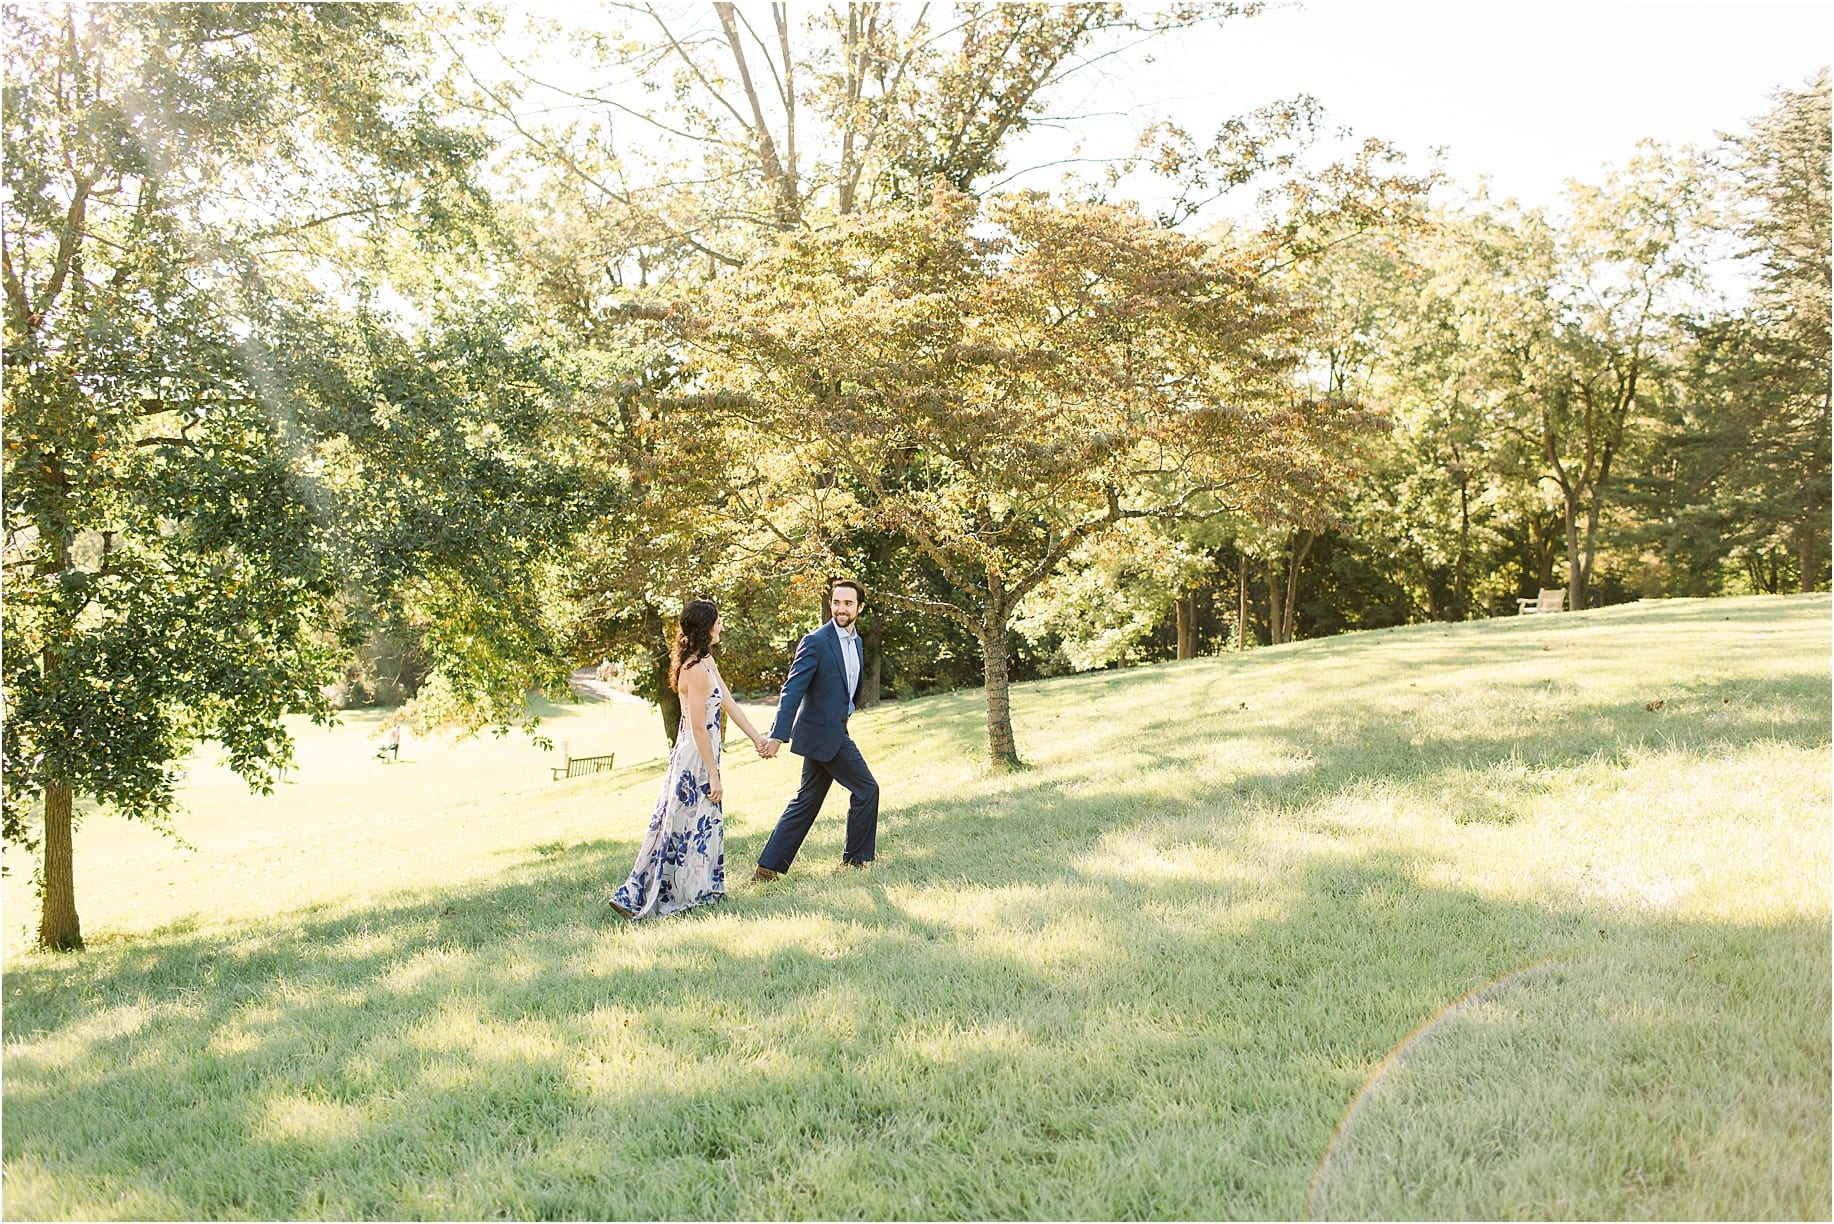 Meadowlark Botanical Gardens Engagements DC wedding photographer erika mills_0016.jpg